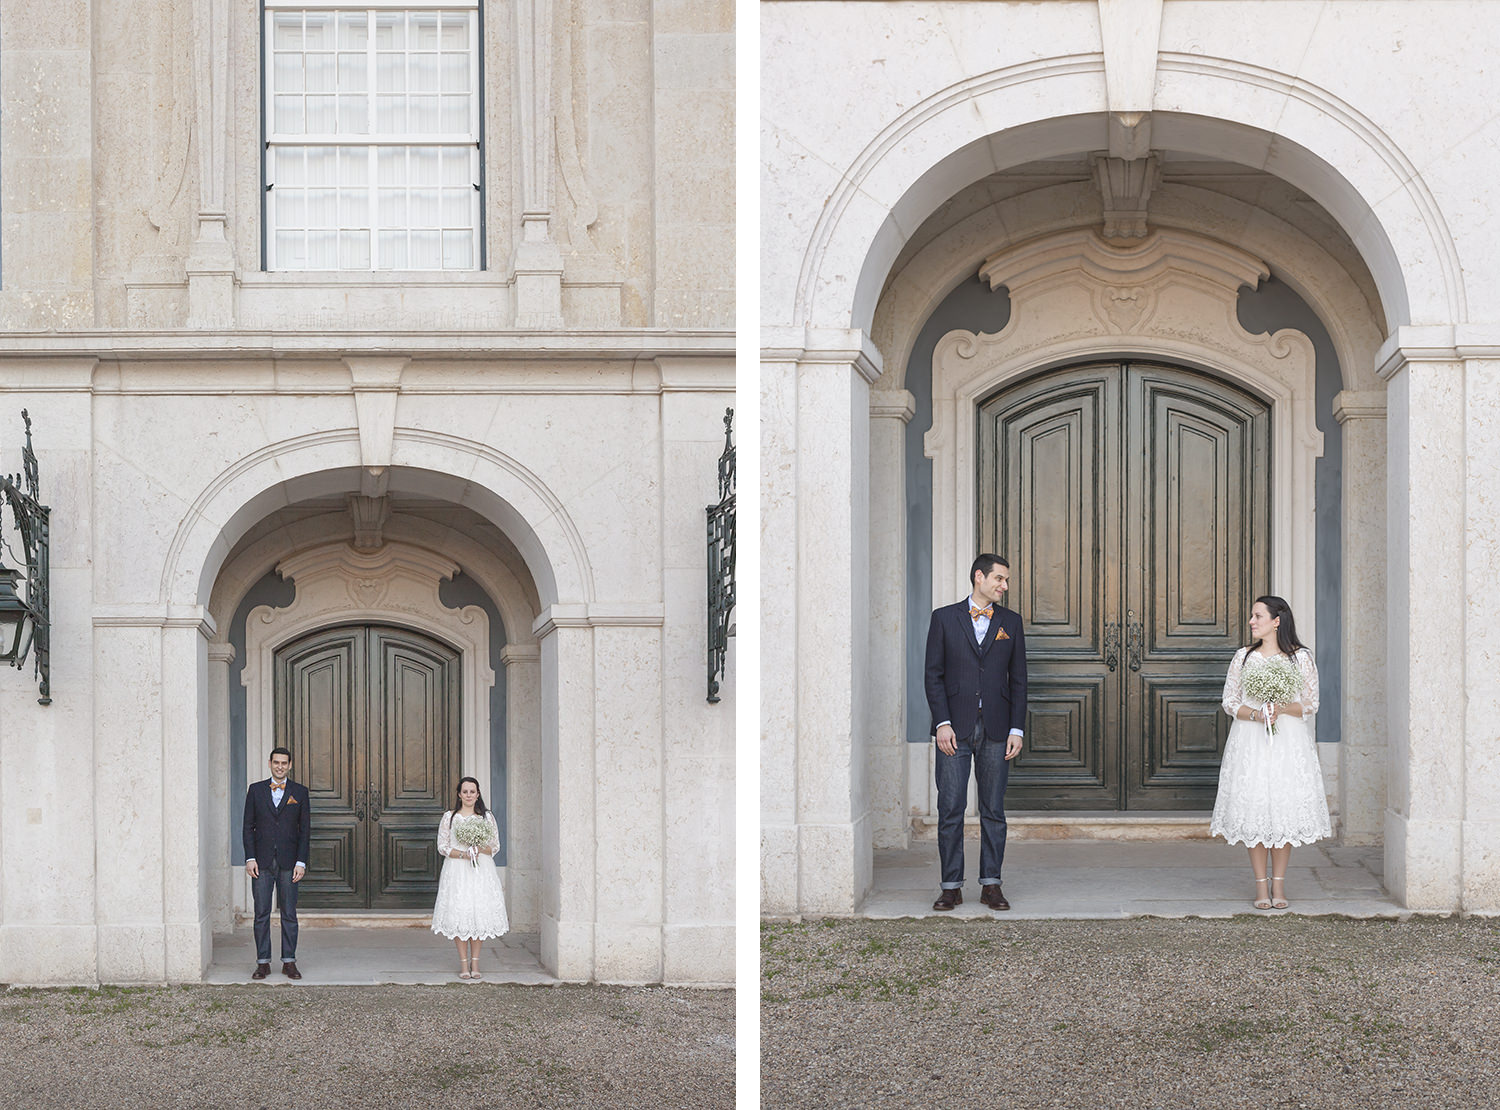 queluz-palace-wedding-photographer-terra-fotografia-129.jpg